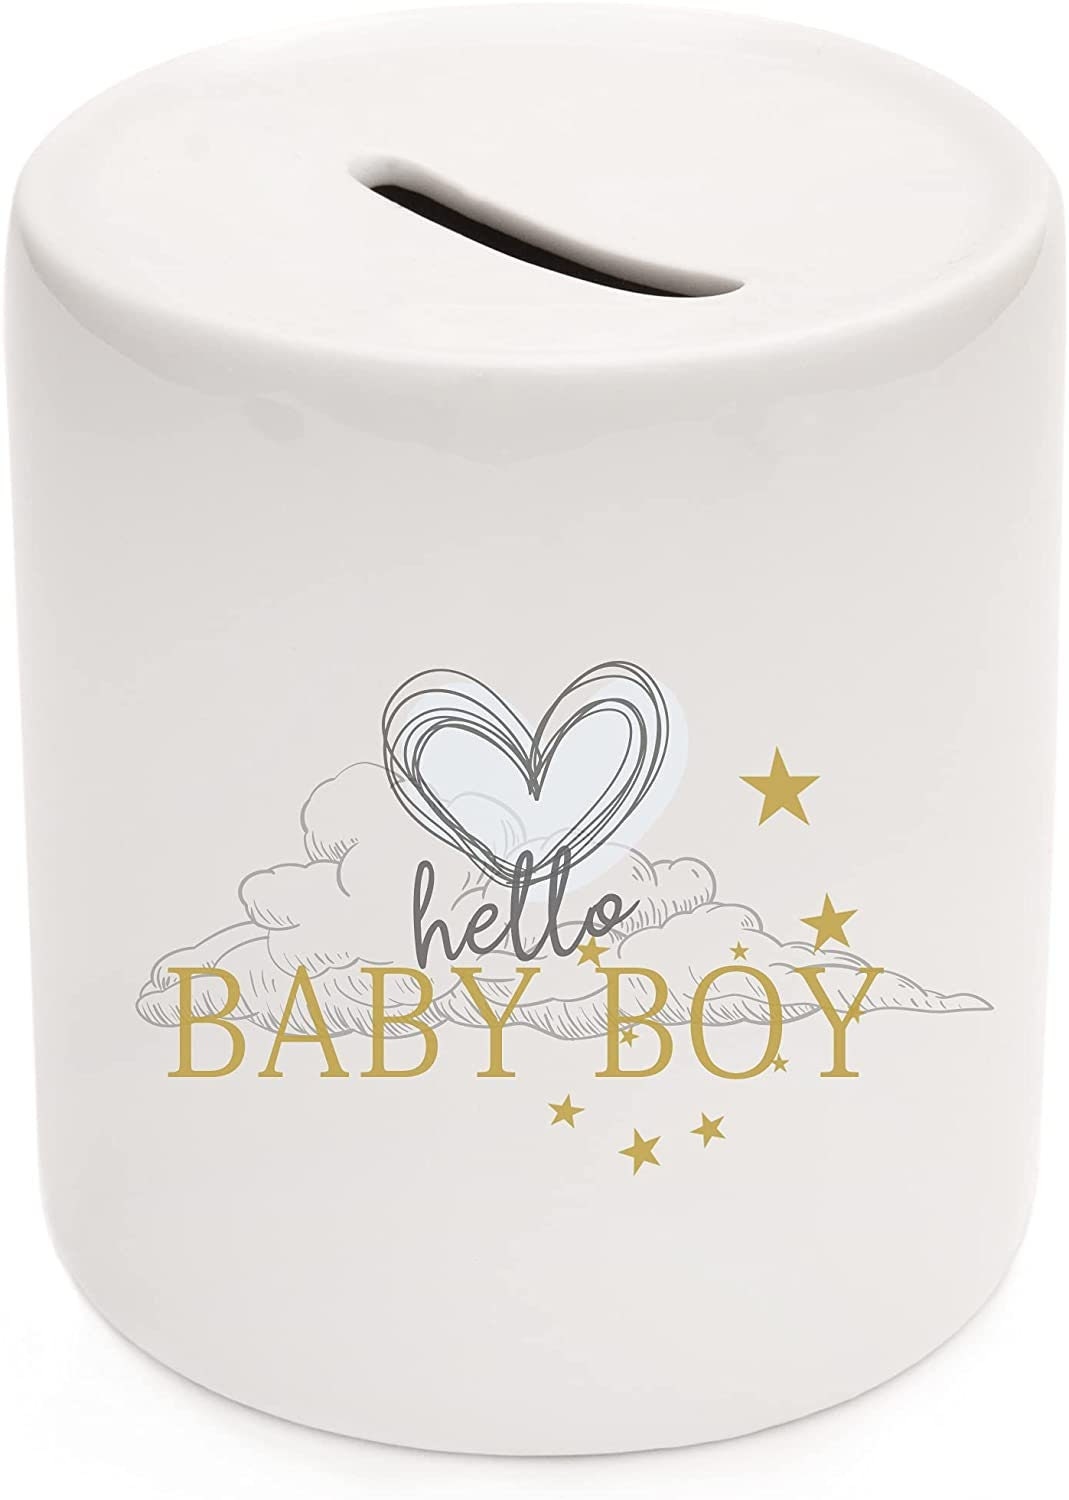 New Baby Boy Gift Money Box Ideal Baby Boy Birth Present Money Bank Piggy Bank Cash Coin Money Box for Kids Birthday